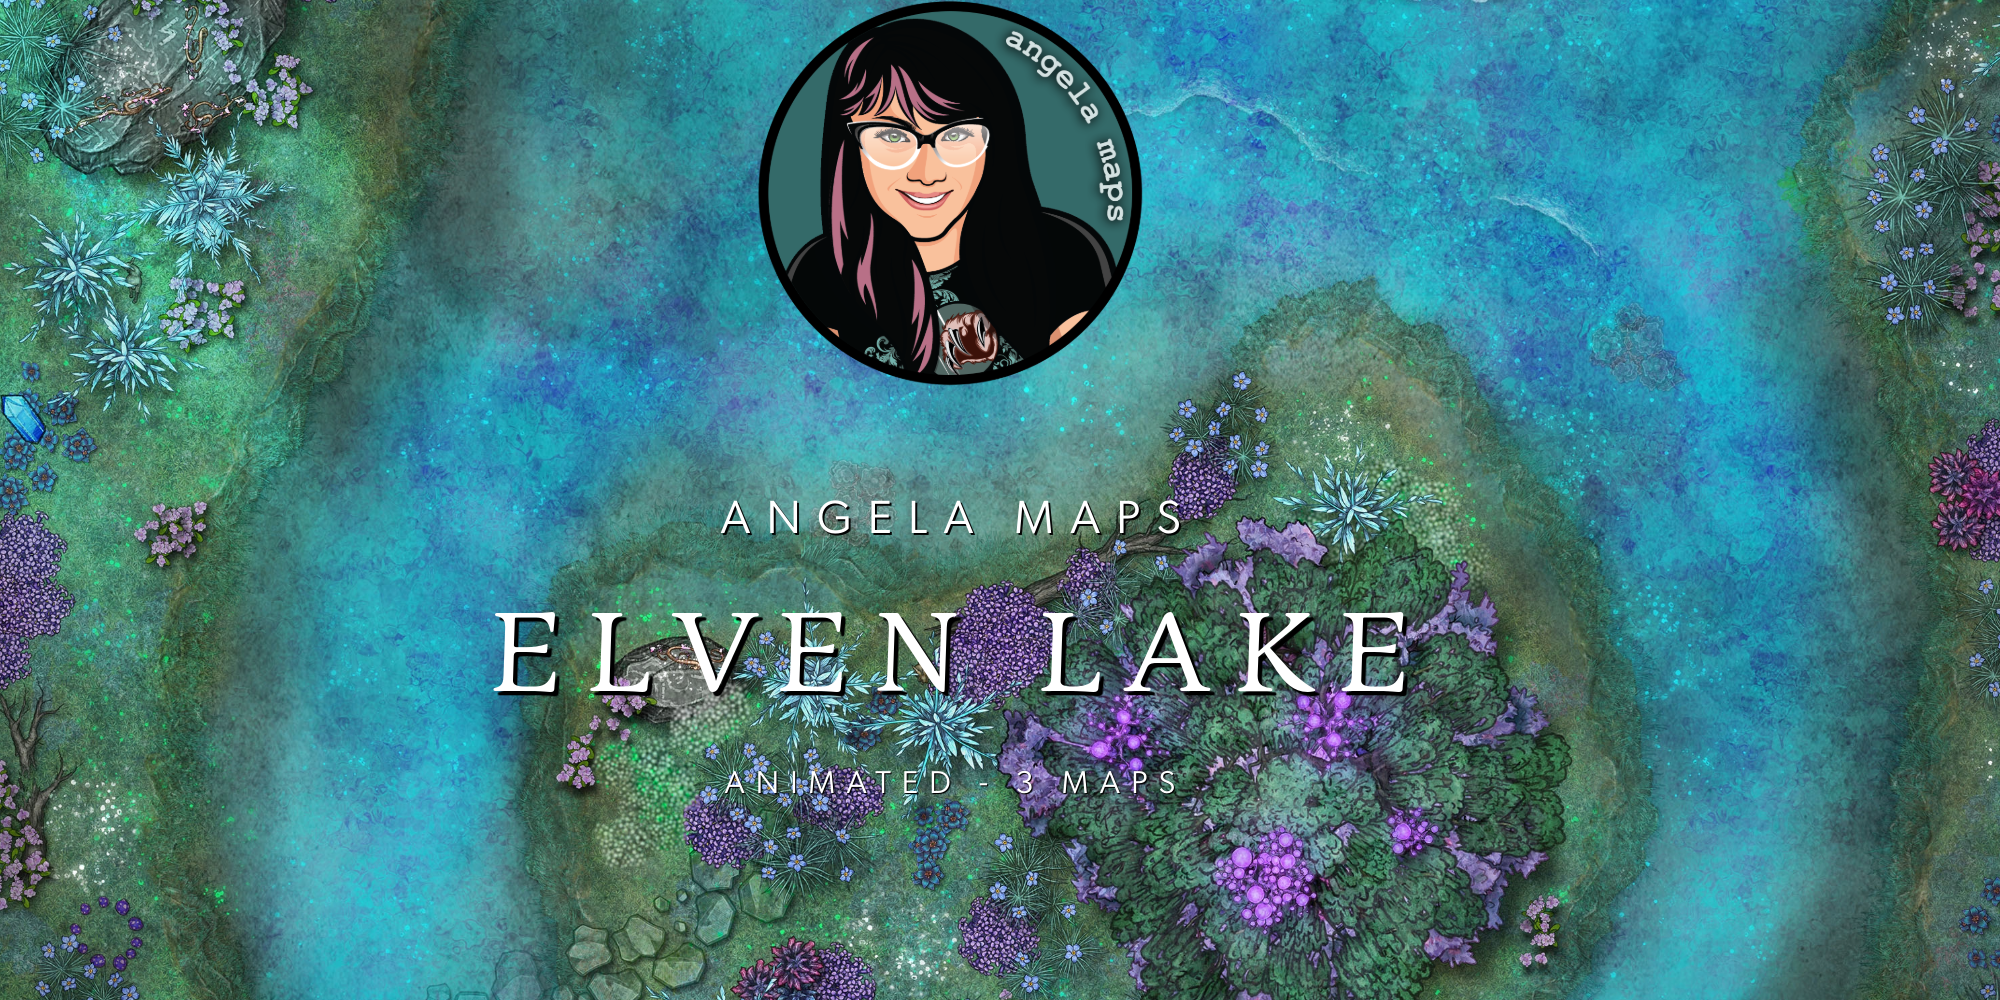 Elven lake battle map pack